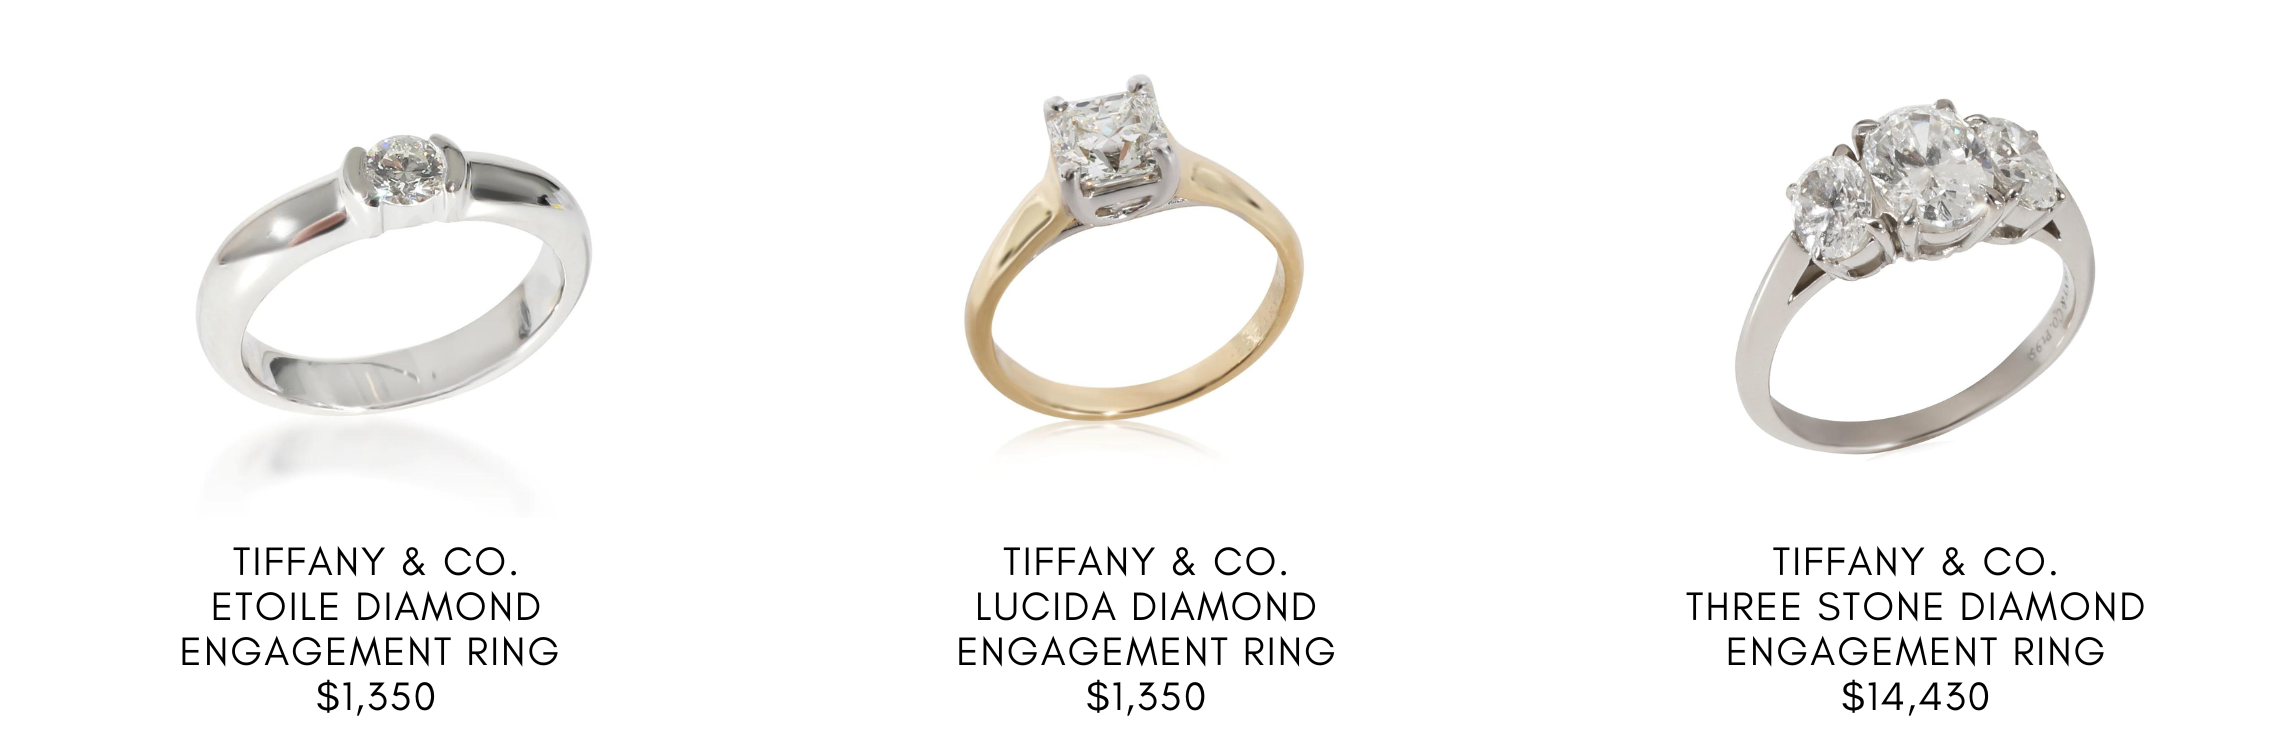 PHOTOS: Princess Eugenie's Engagement Ring Looks Like Sarah Ferguson's